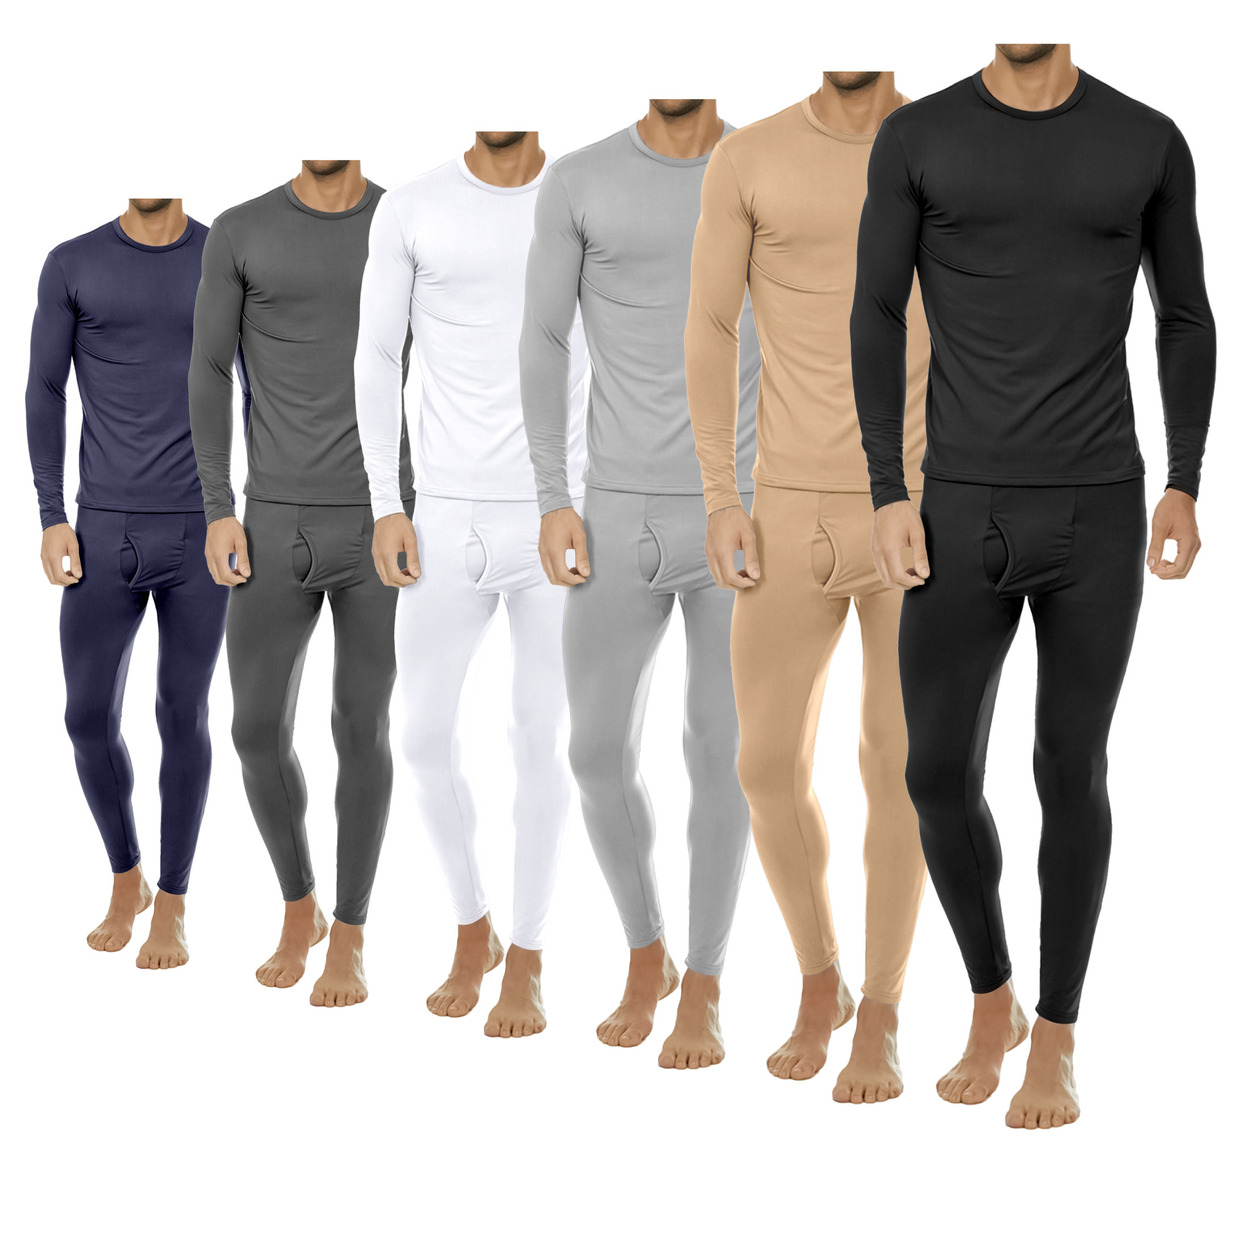 2-Sets: Men's Winter Warm Fleece Lined Thermal Underwear Set For Cold Weather - Grey&navy, Medium